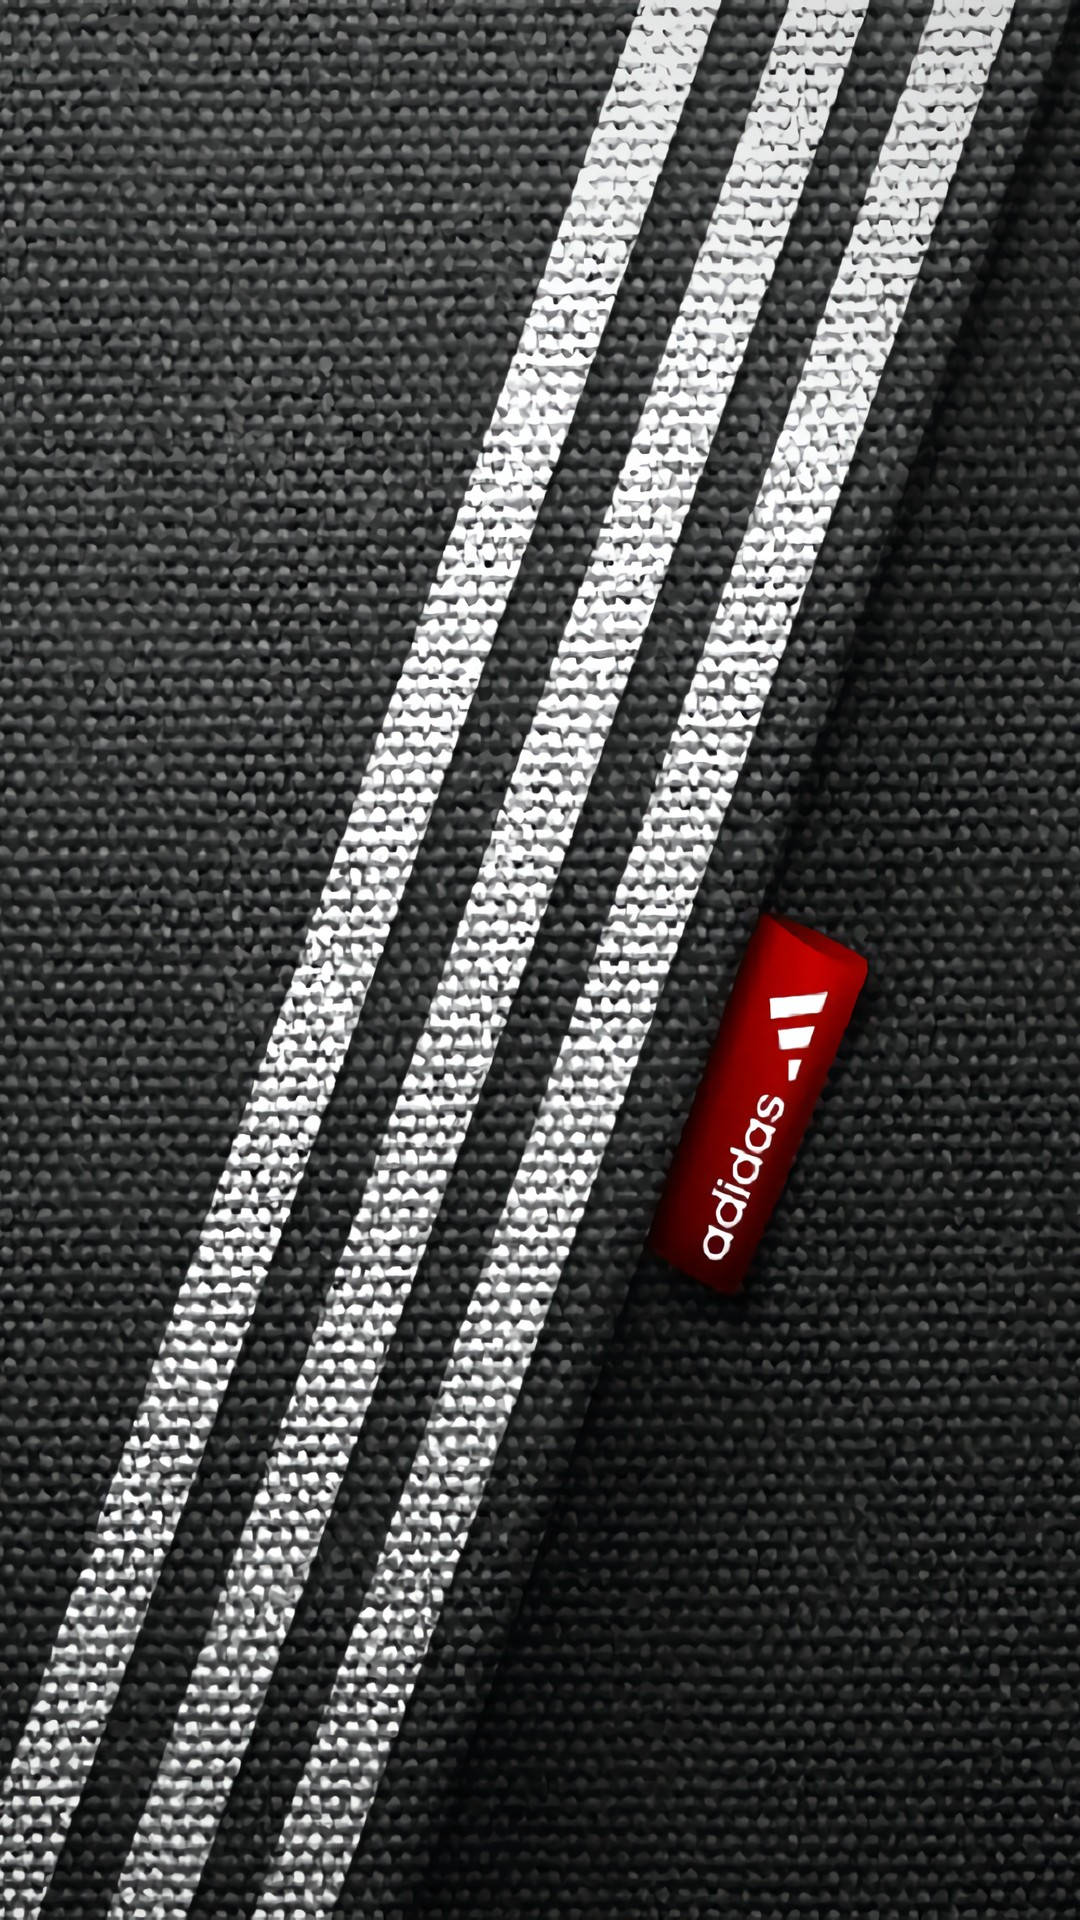 Adidas Branding Samsung Galaxy S4 Wallpaper